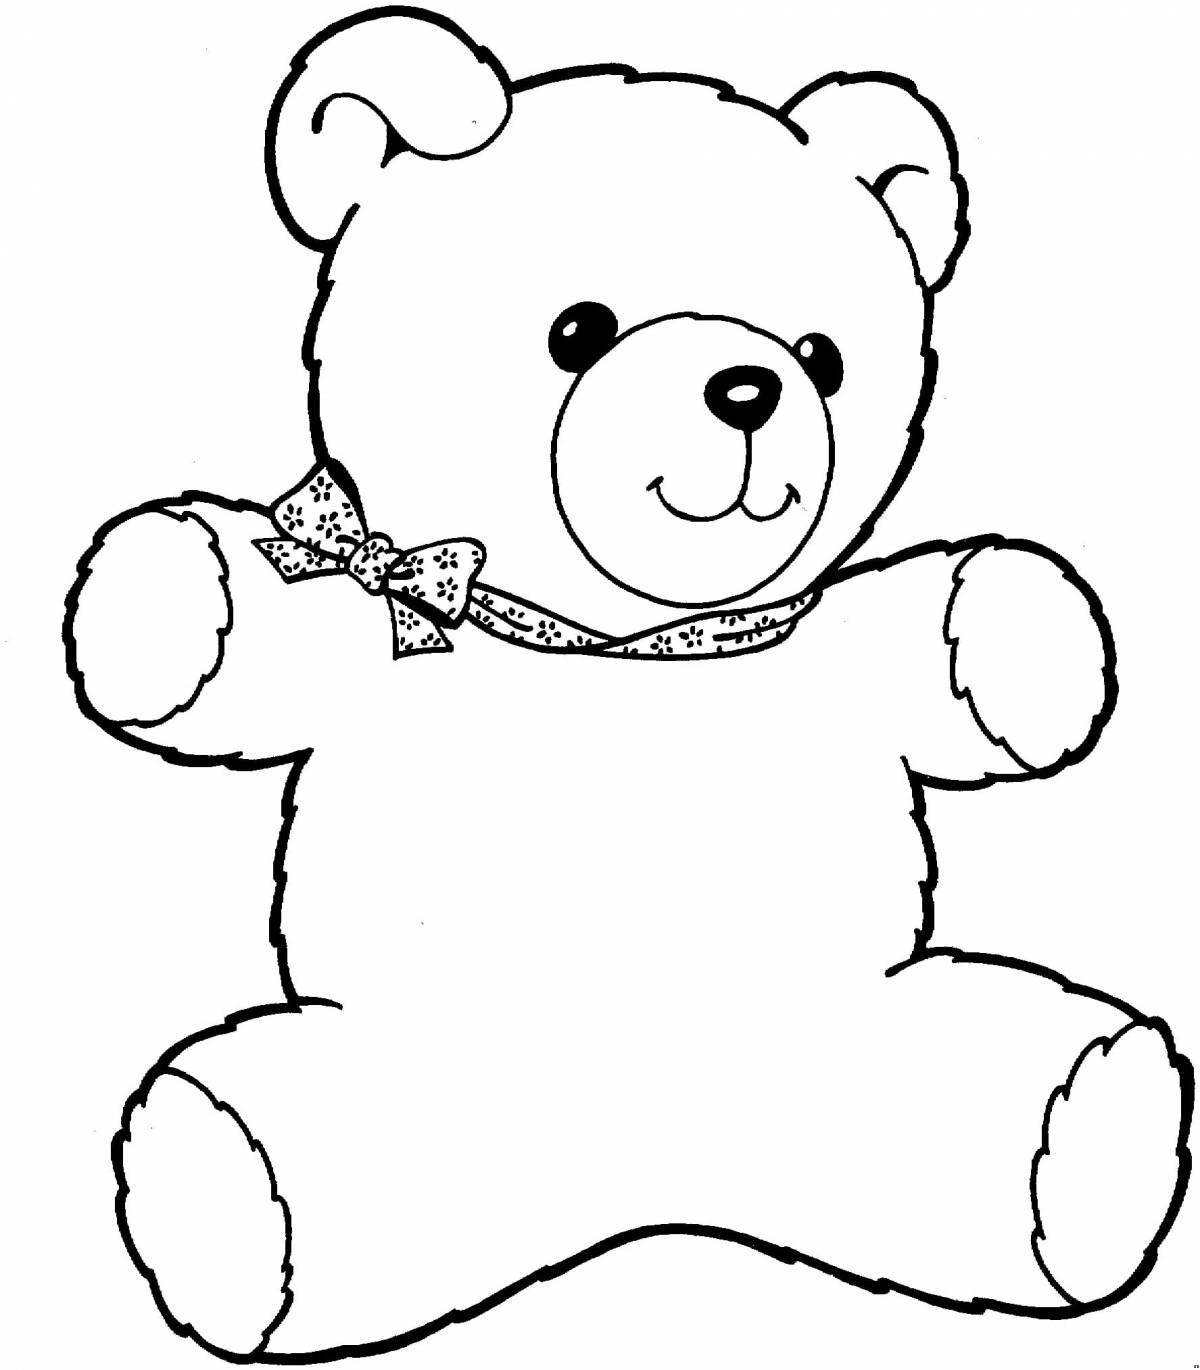 Fancy teddy bear coloring page